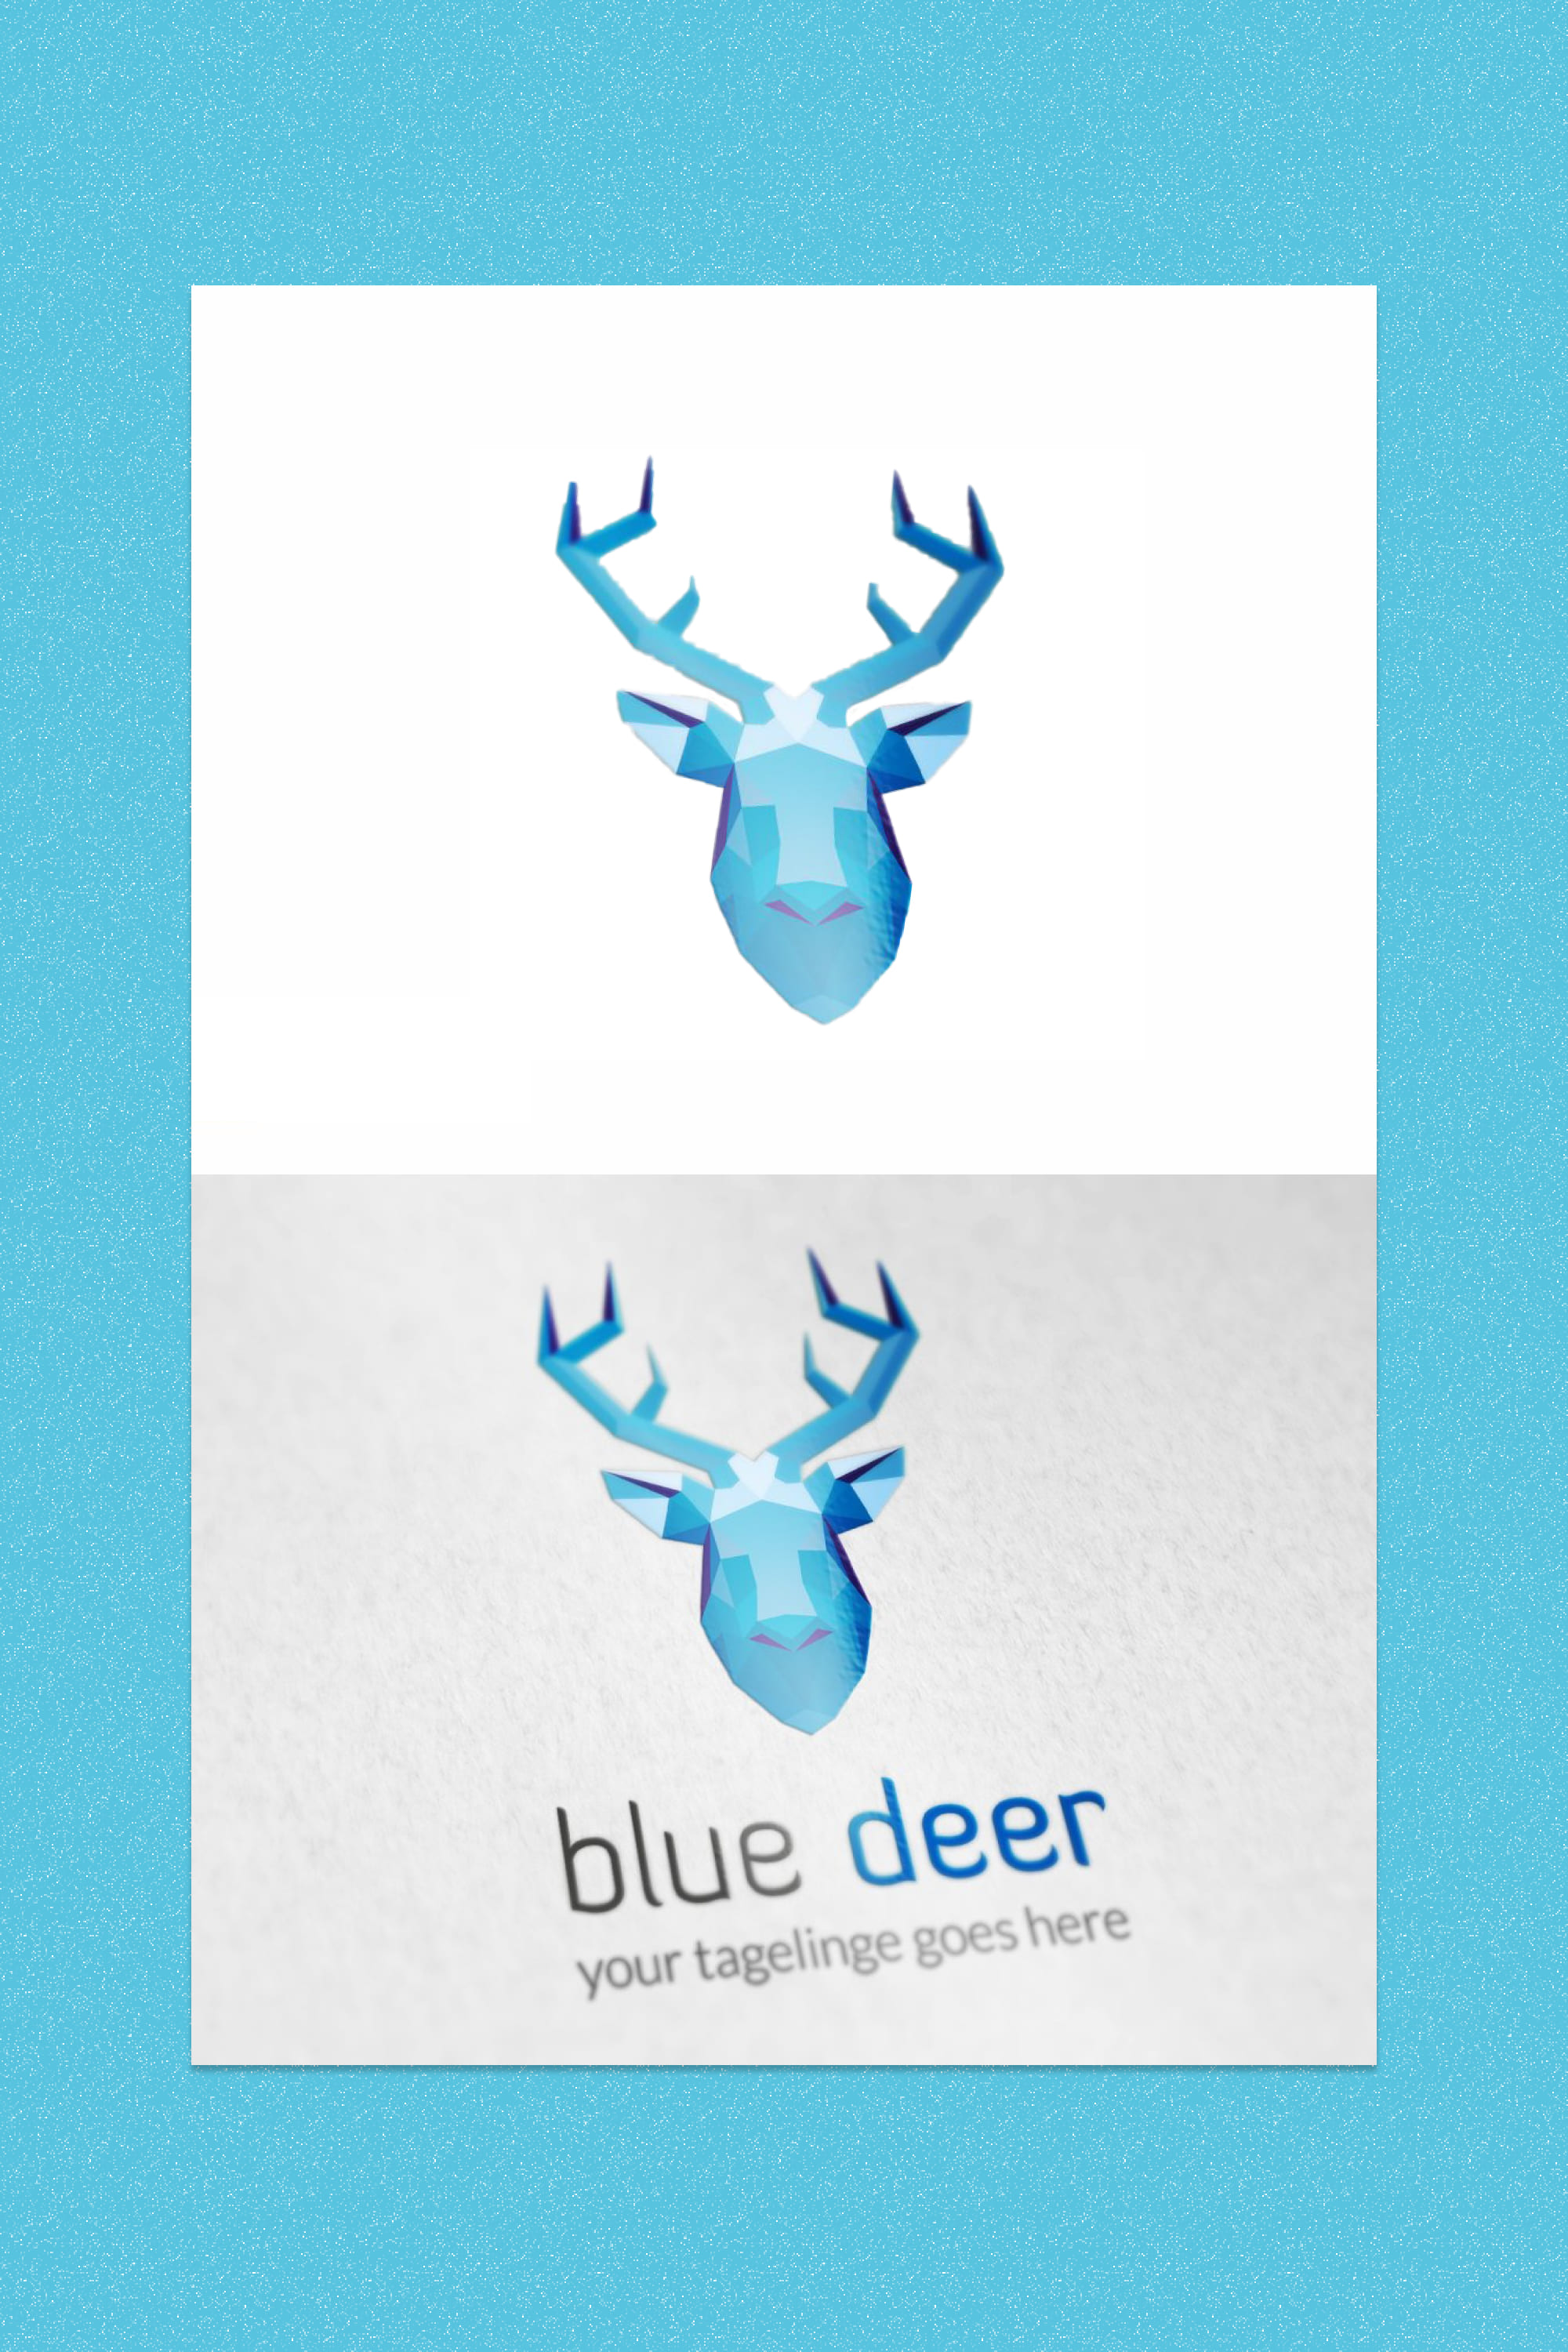 blue deer logo pinterest